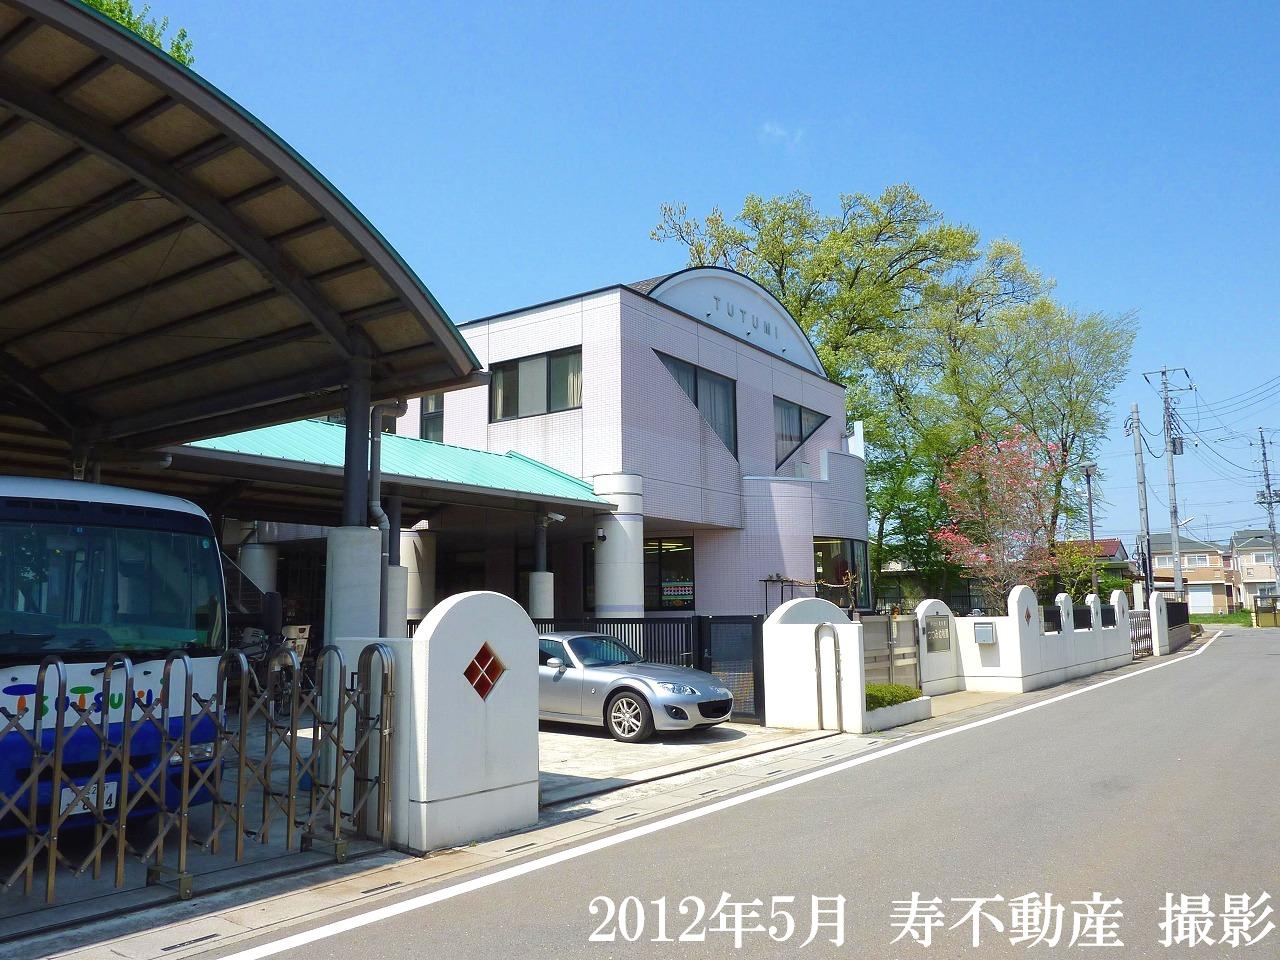 kindergarten ・ Nursery. Tsutsumi kindergarten (kindergarten ・ 457m to the nursery)